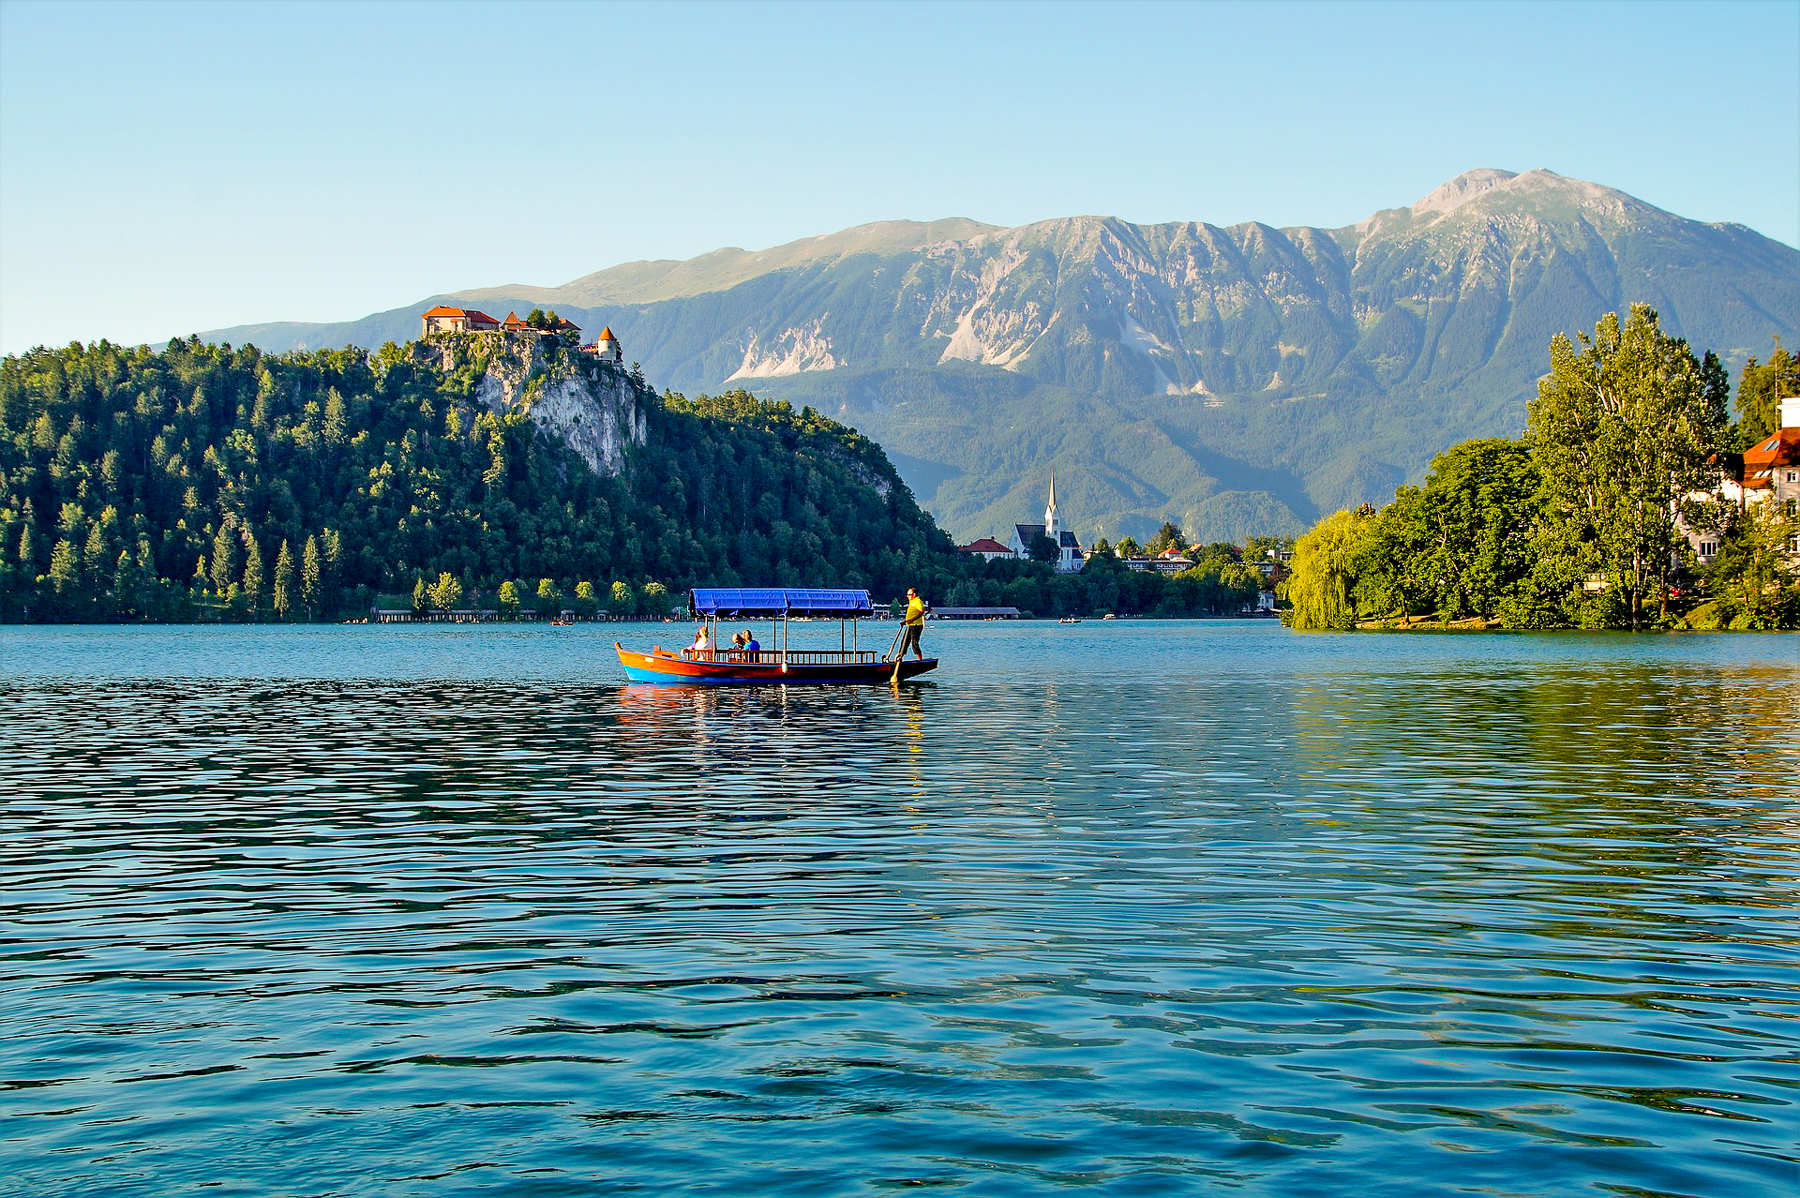 A pletna sailing across Lake Bled